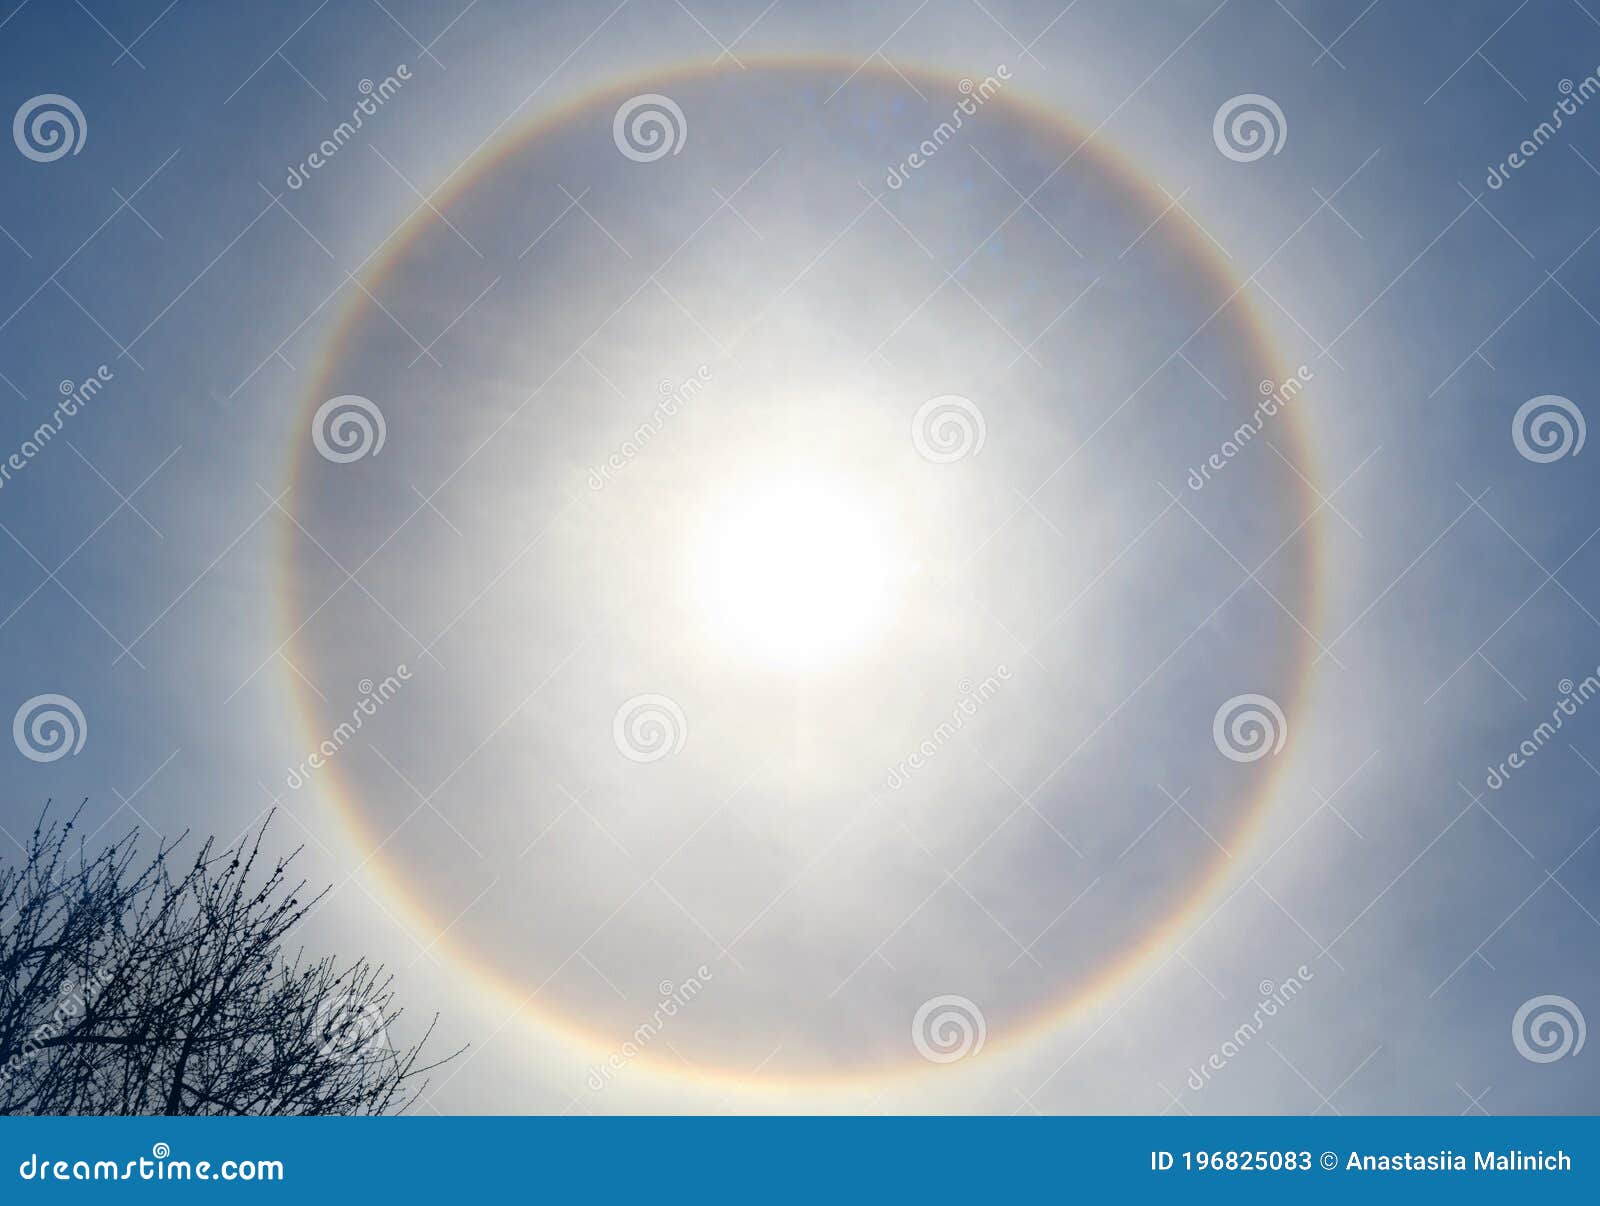 Spot a circle around the sun? It's probably a sun halo! | wgrz.com